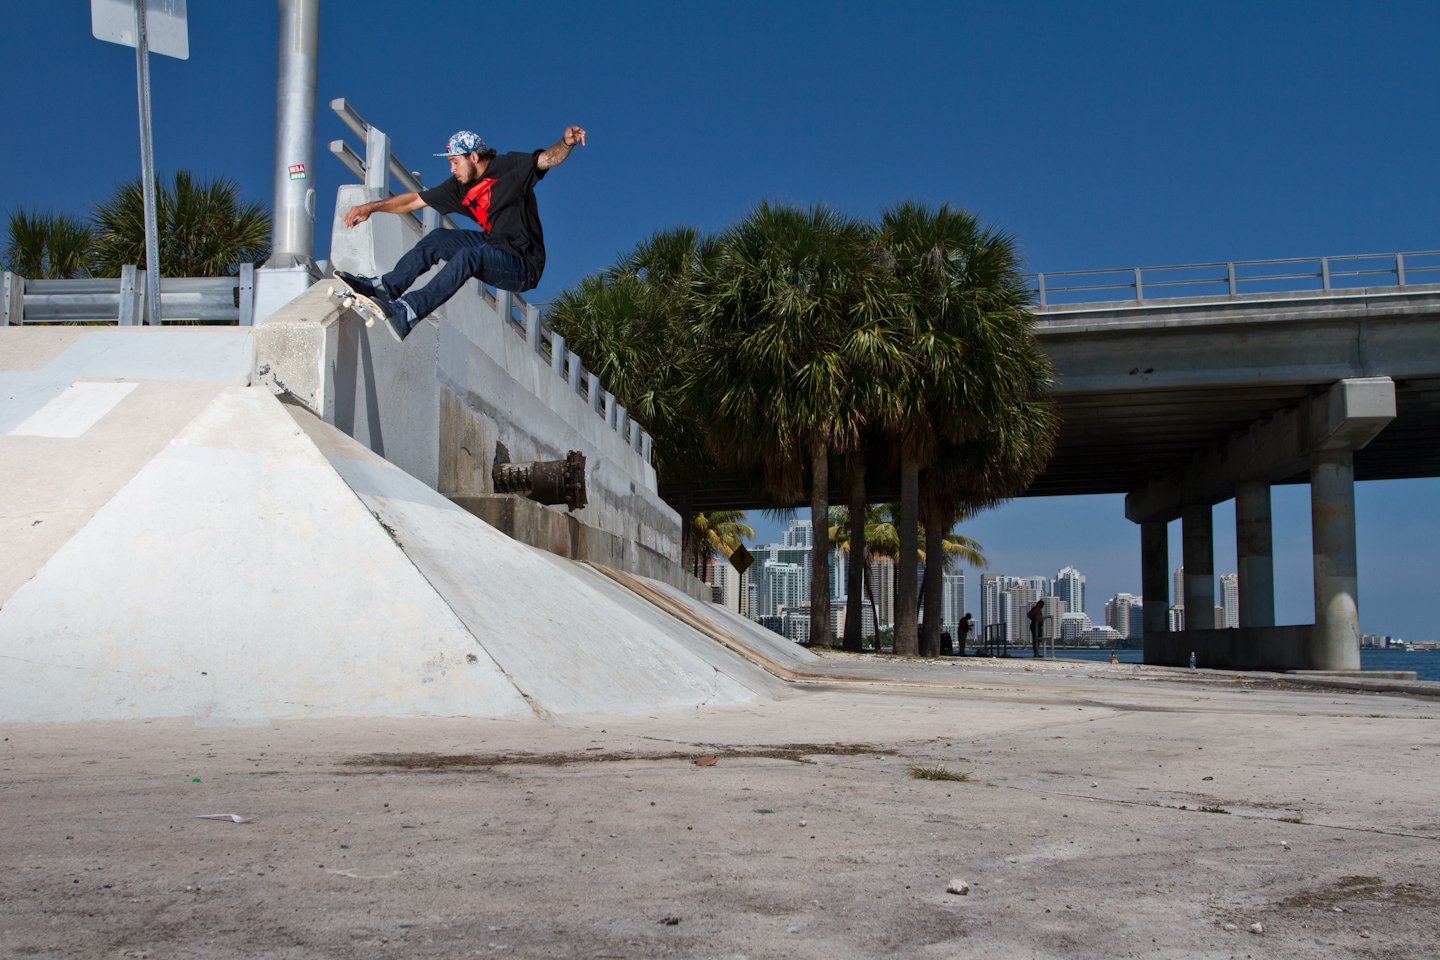 Manny Santiago | 180 Nosegrind to Fakie | Key Biscayne, FL